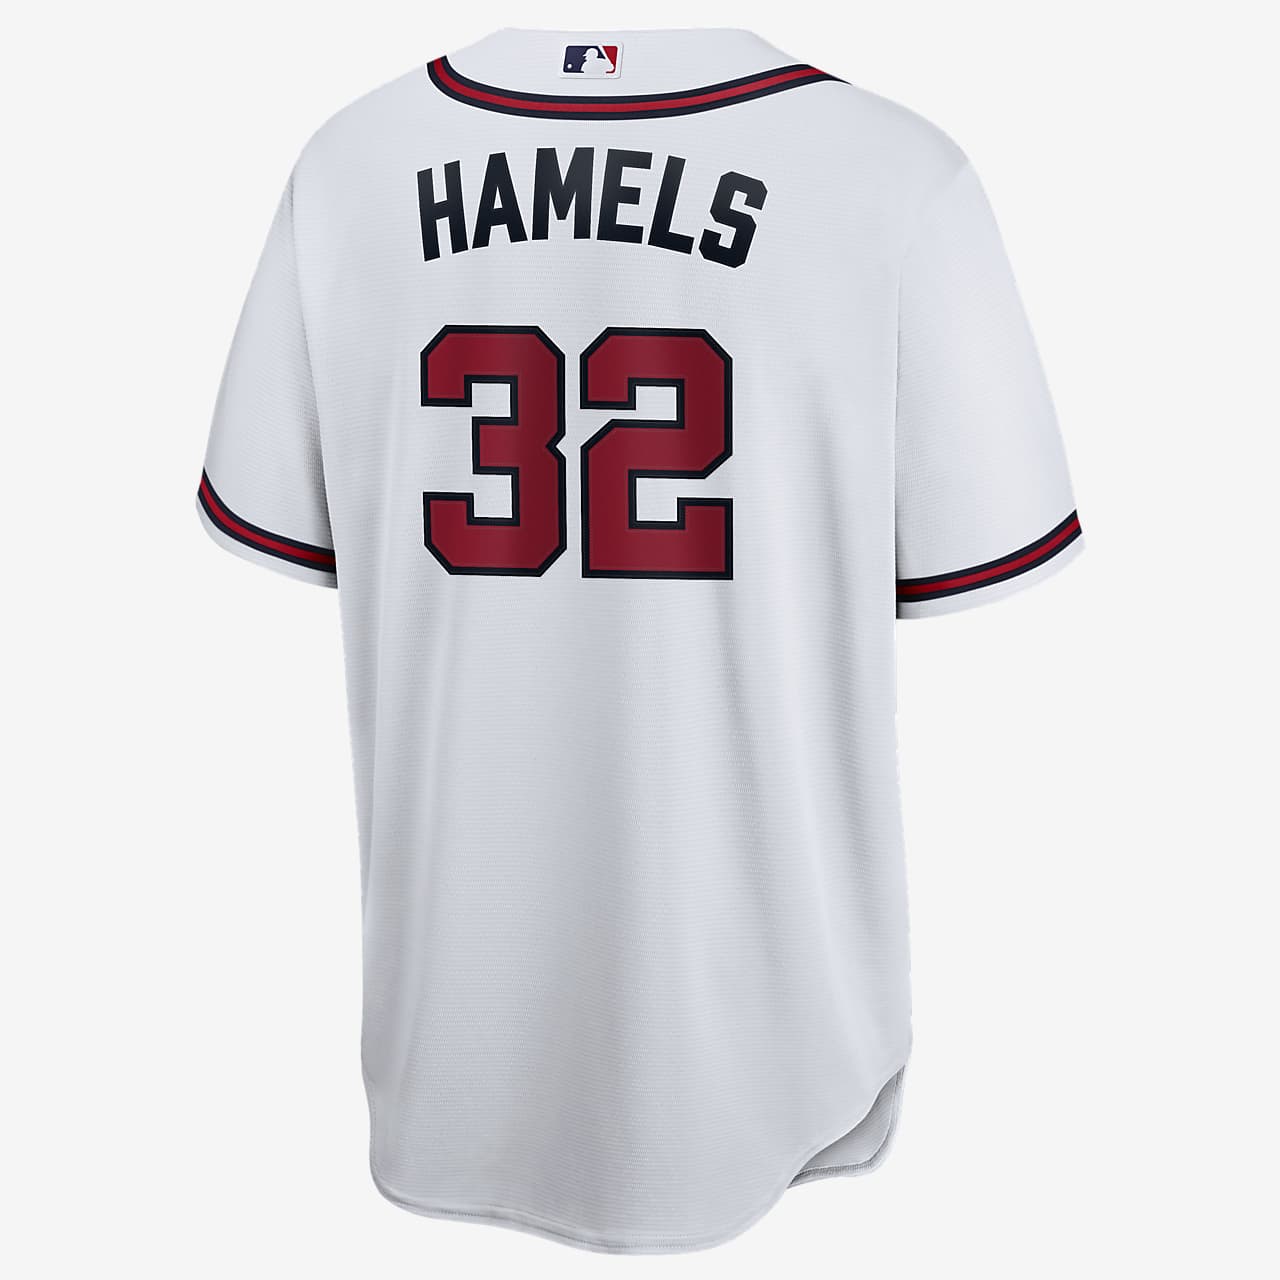 MLB Atlanta Braves (Cole Hamels) Men's Replica Baseball Jersey.